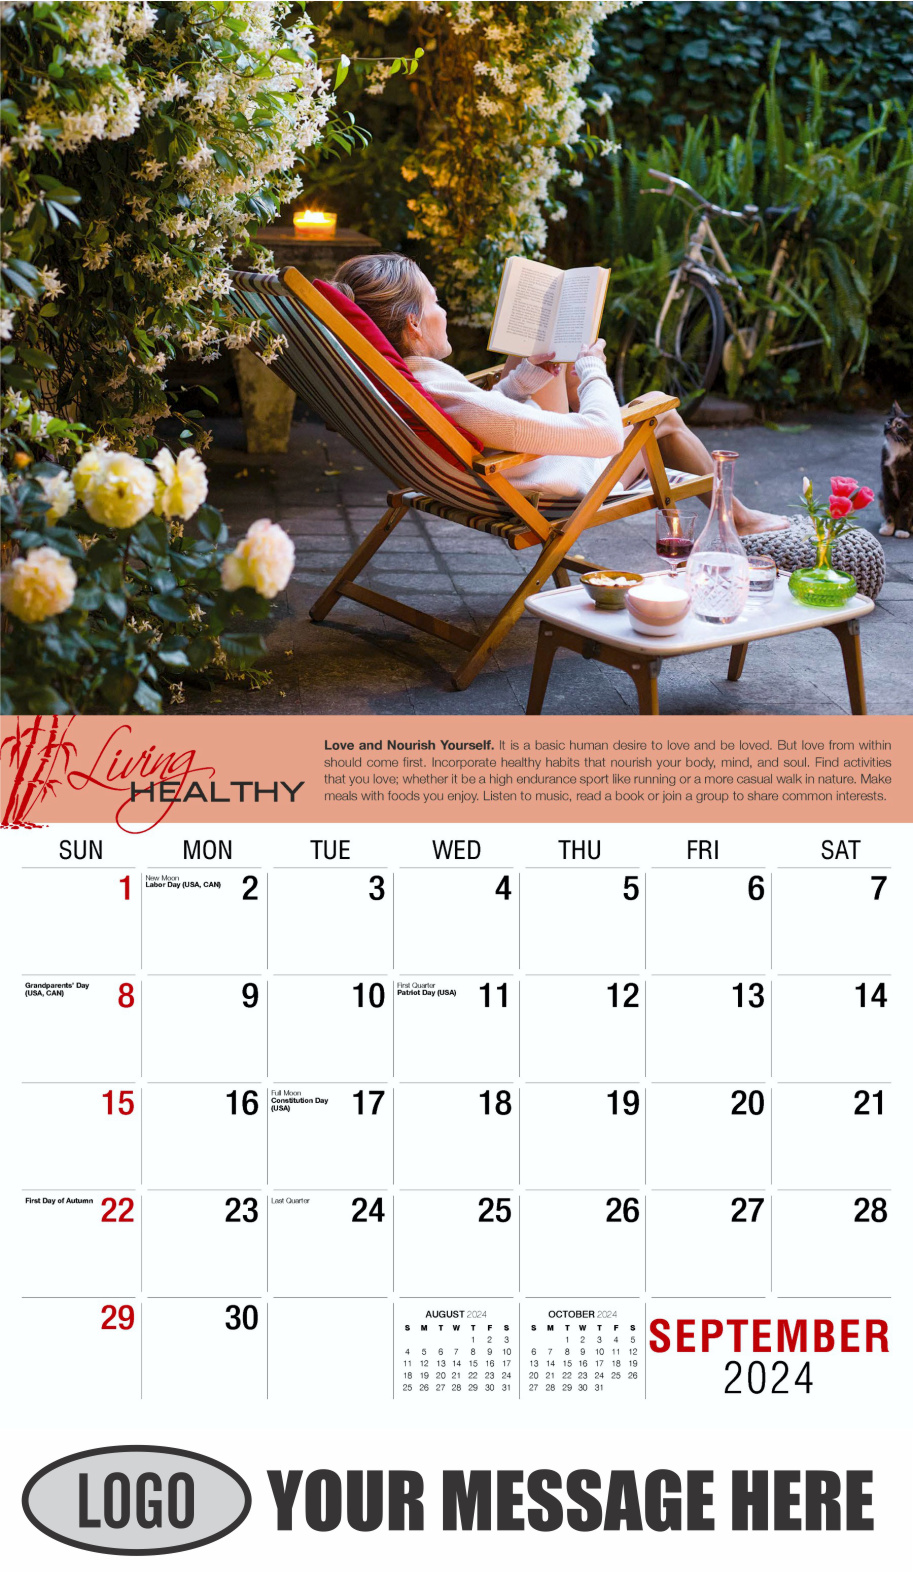 Living Healthy 2024 Business Promotional Calendar - September